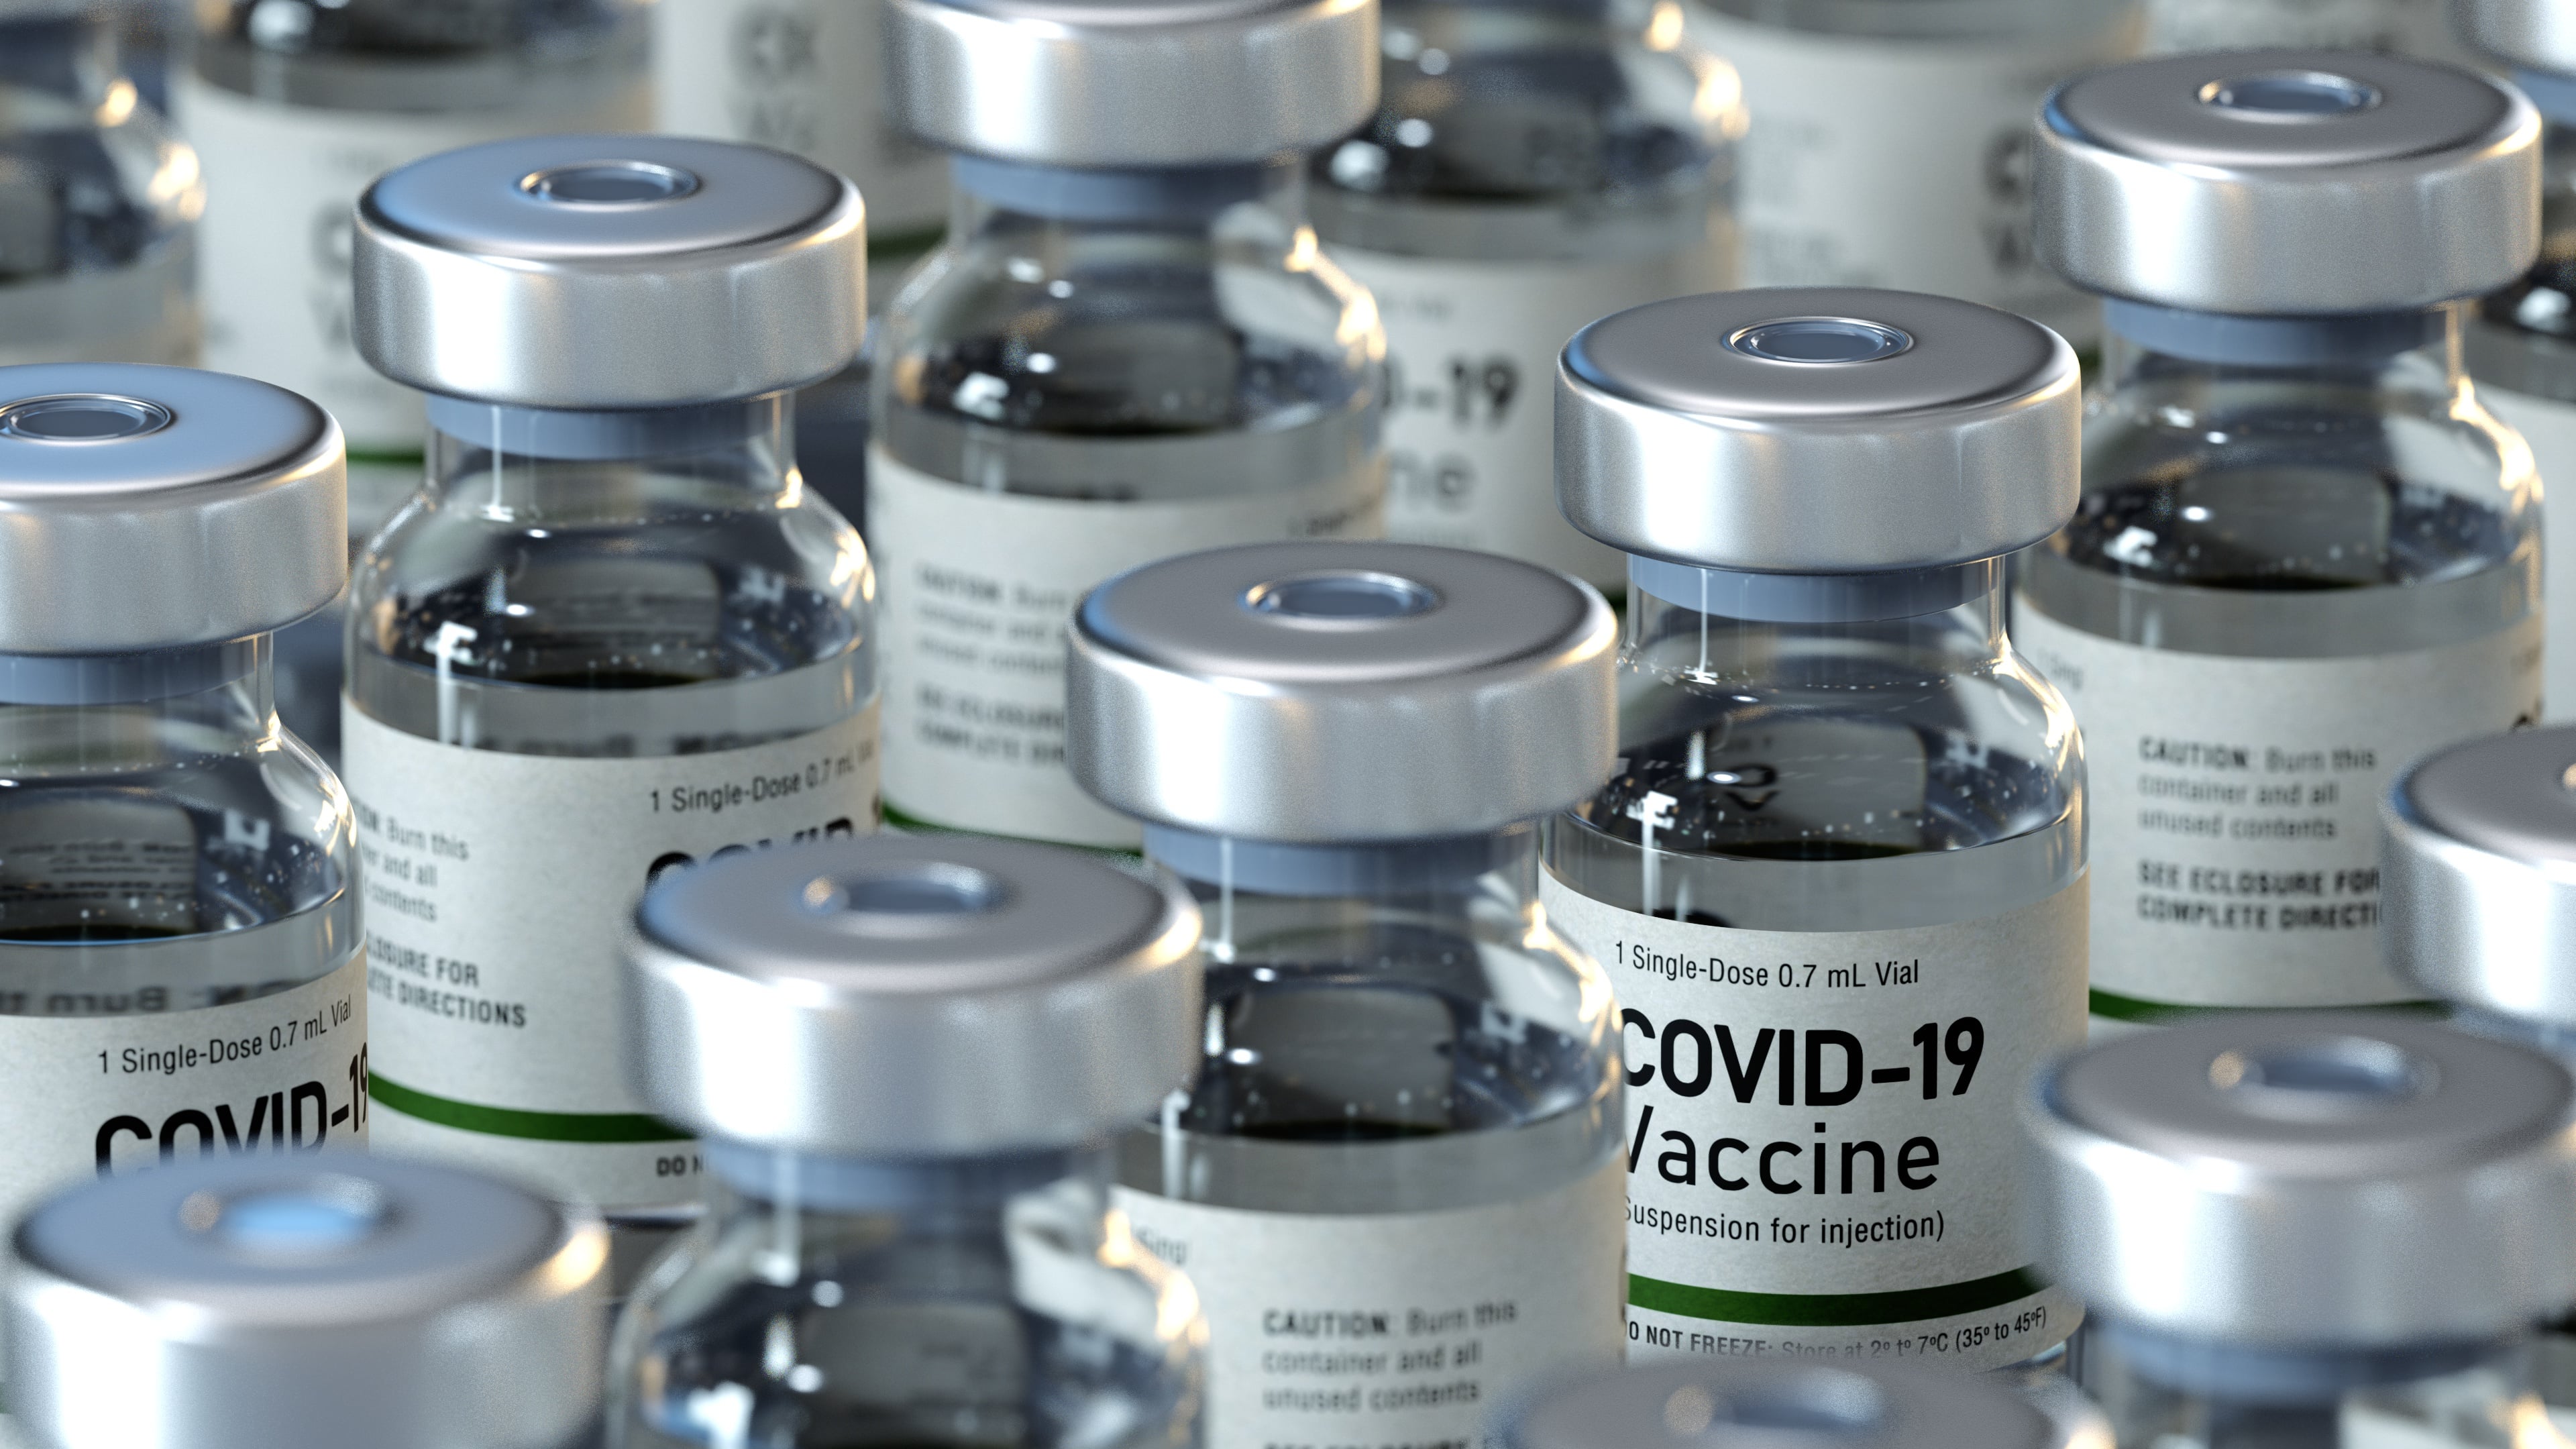 Over 9 million coronavirus vaccine doses have been given in Saudi Arabia